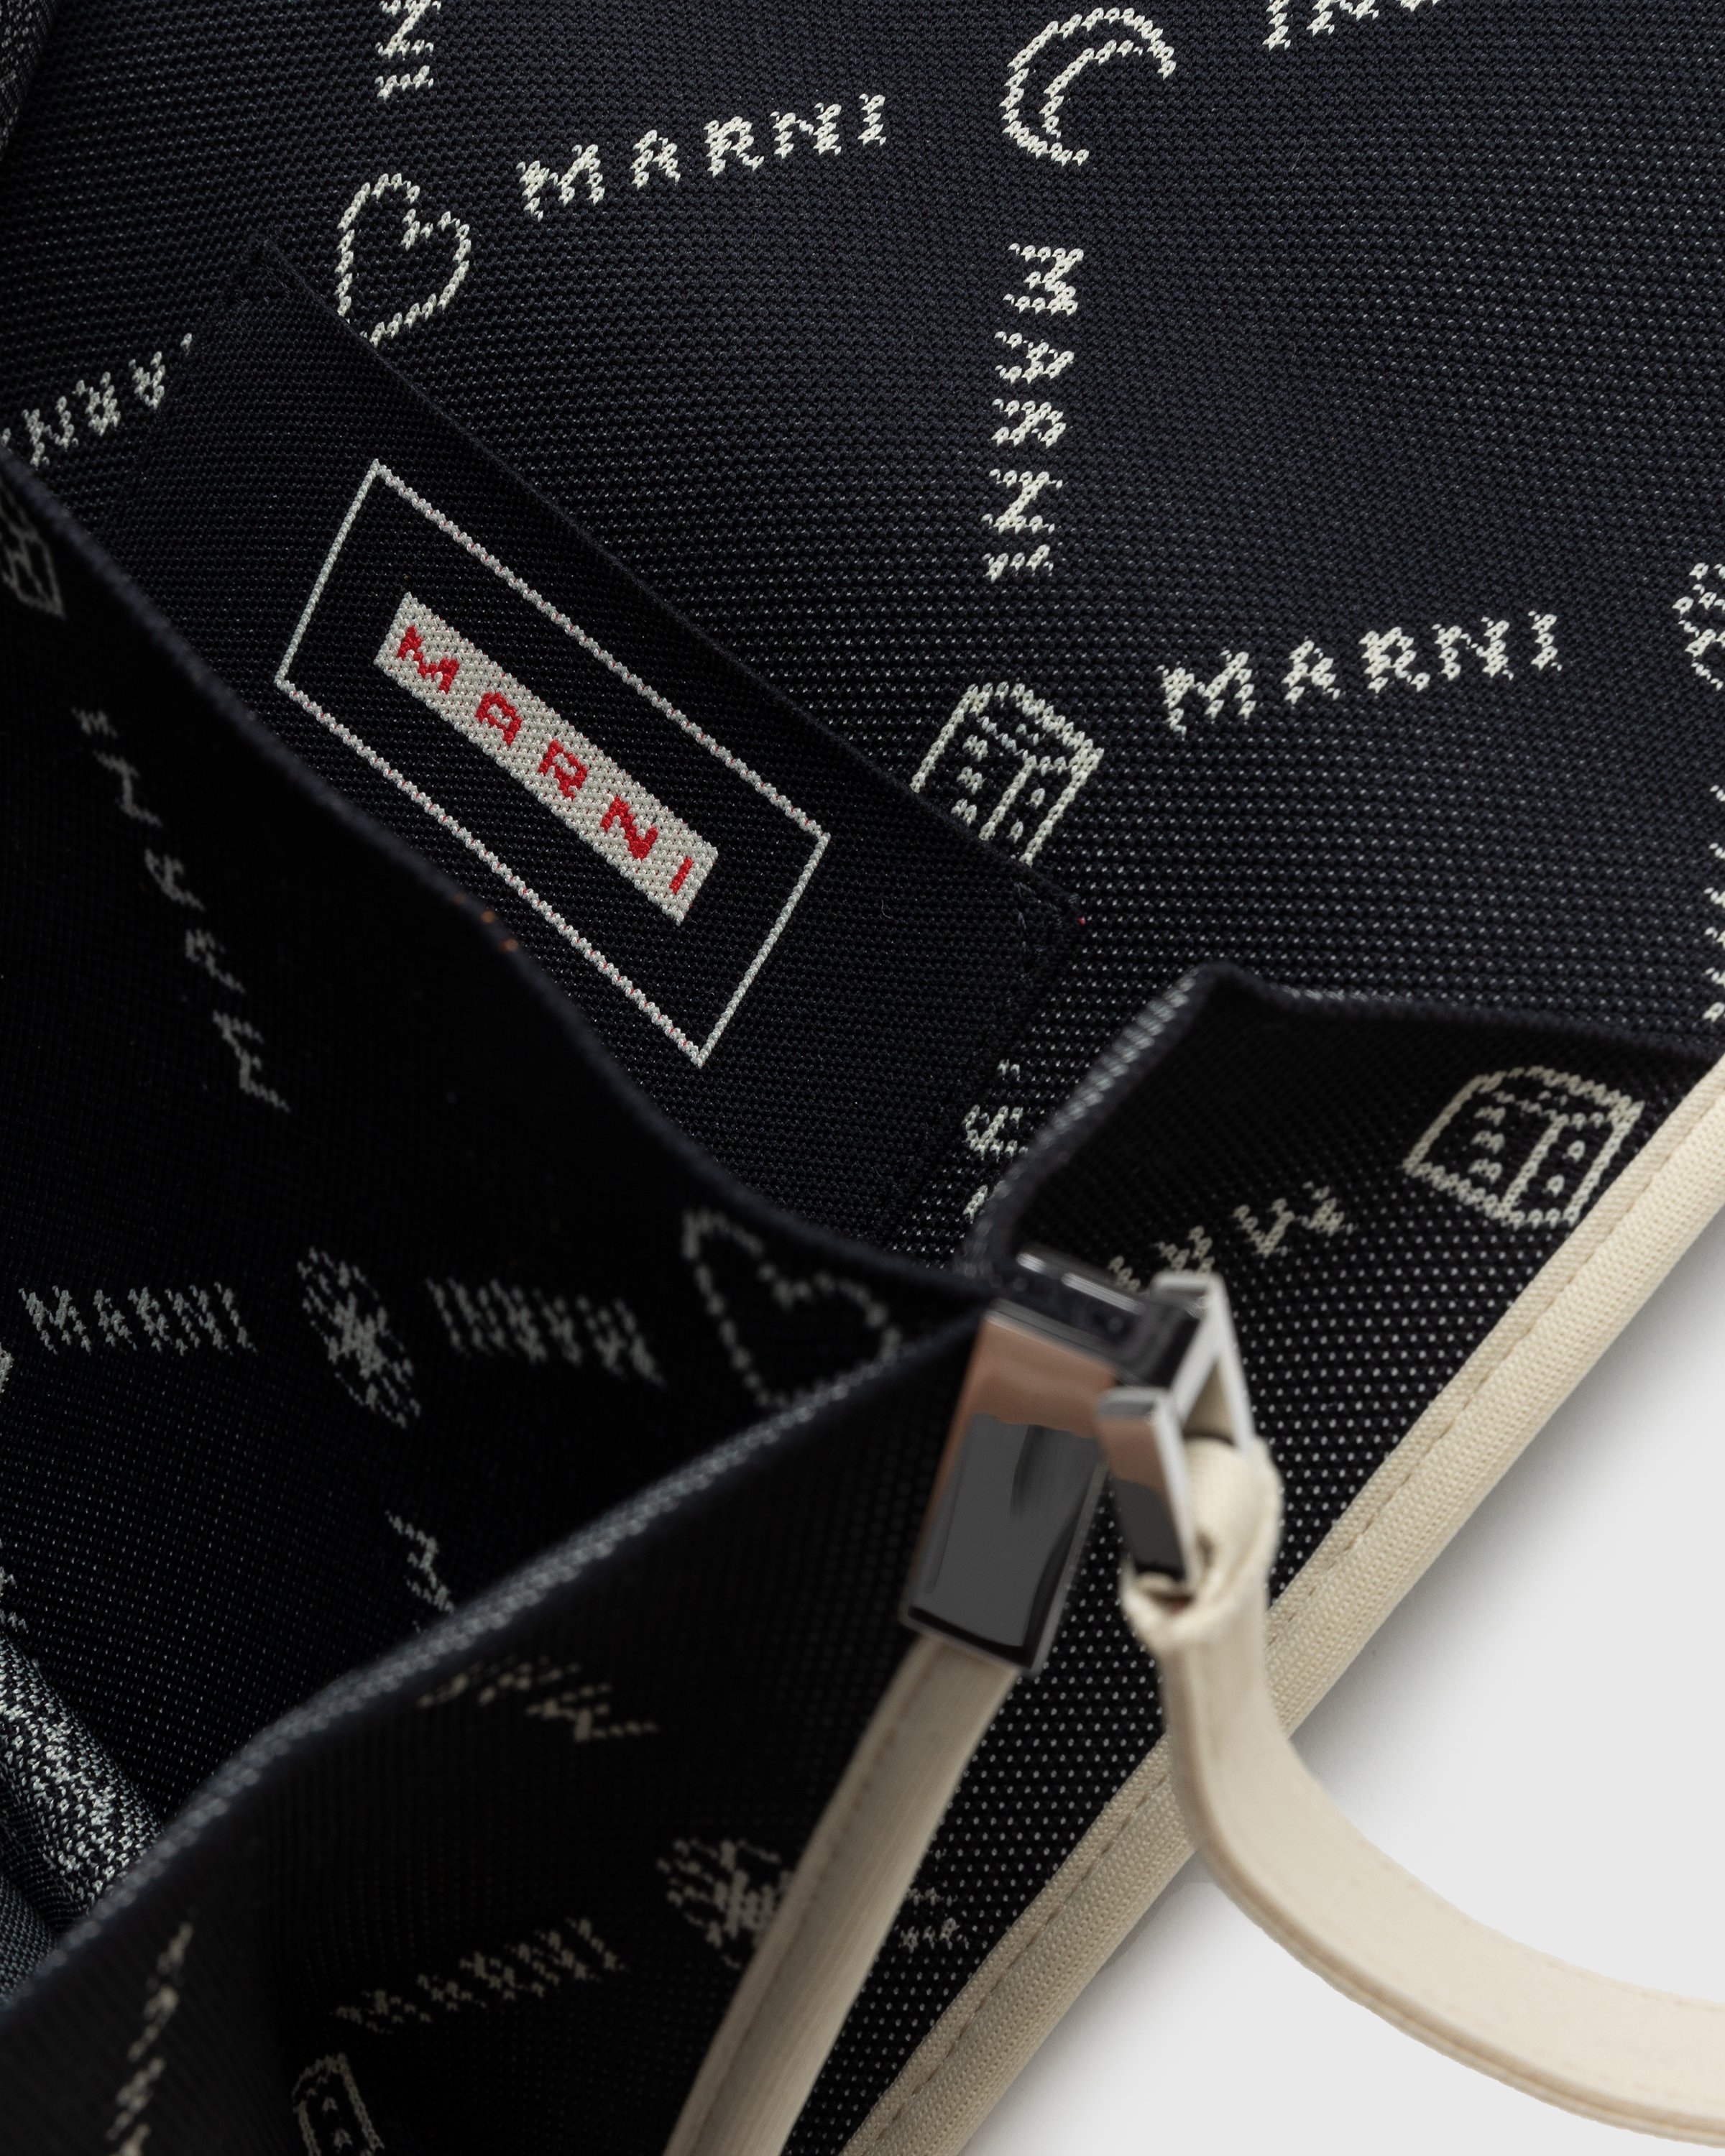 Marni - Trunk Soft Bag Black - Accessories - Black - Image 5